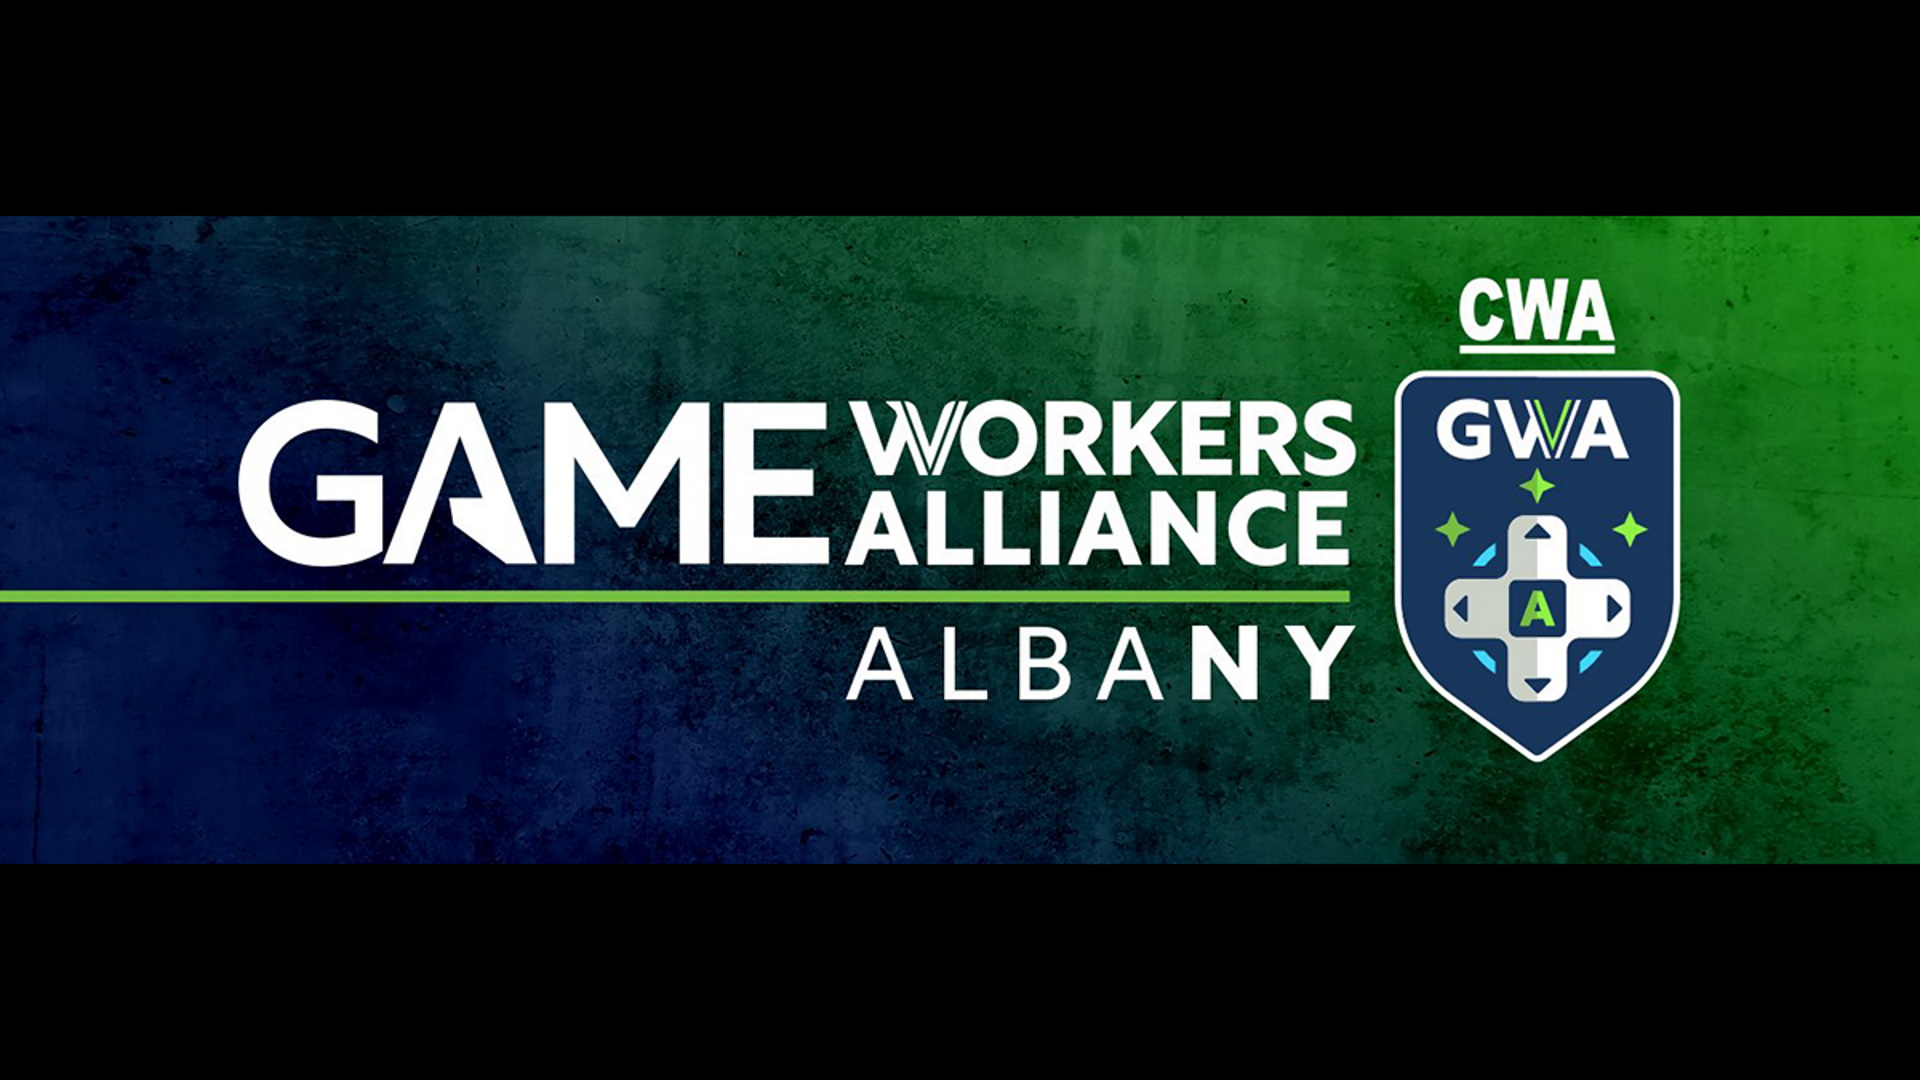 Blizzard Albany votes to form a new QA union under the GWA umbrella